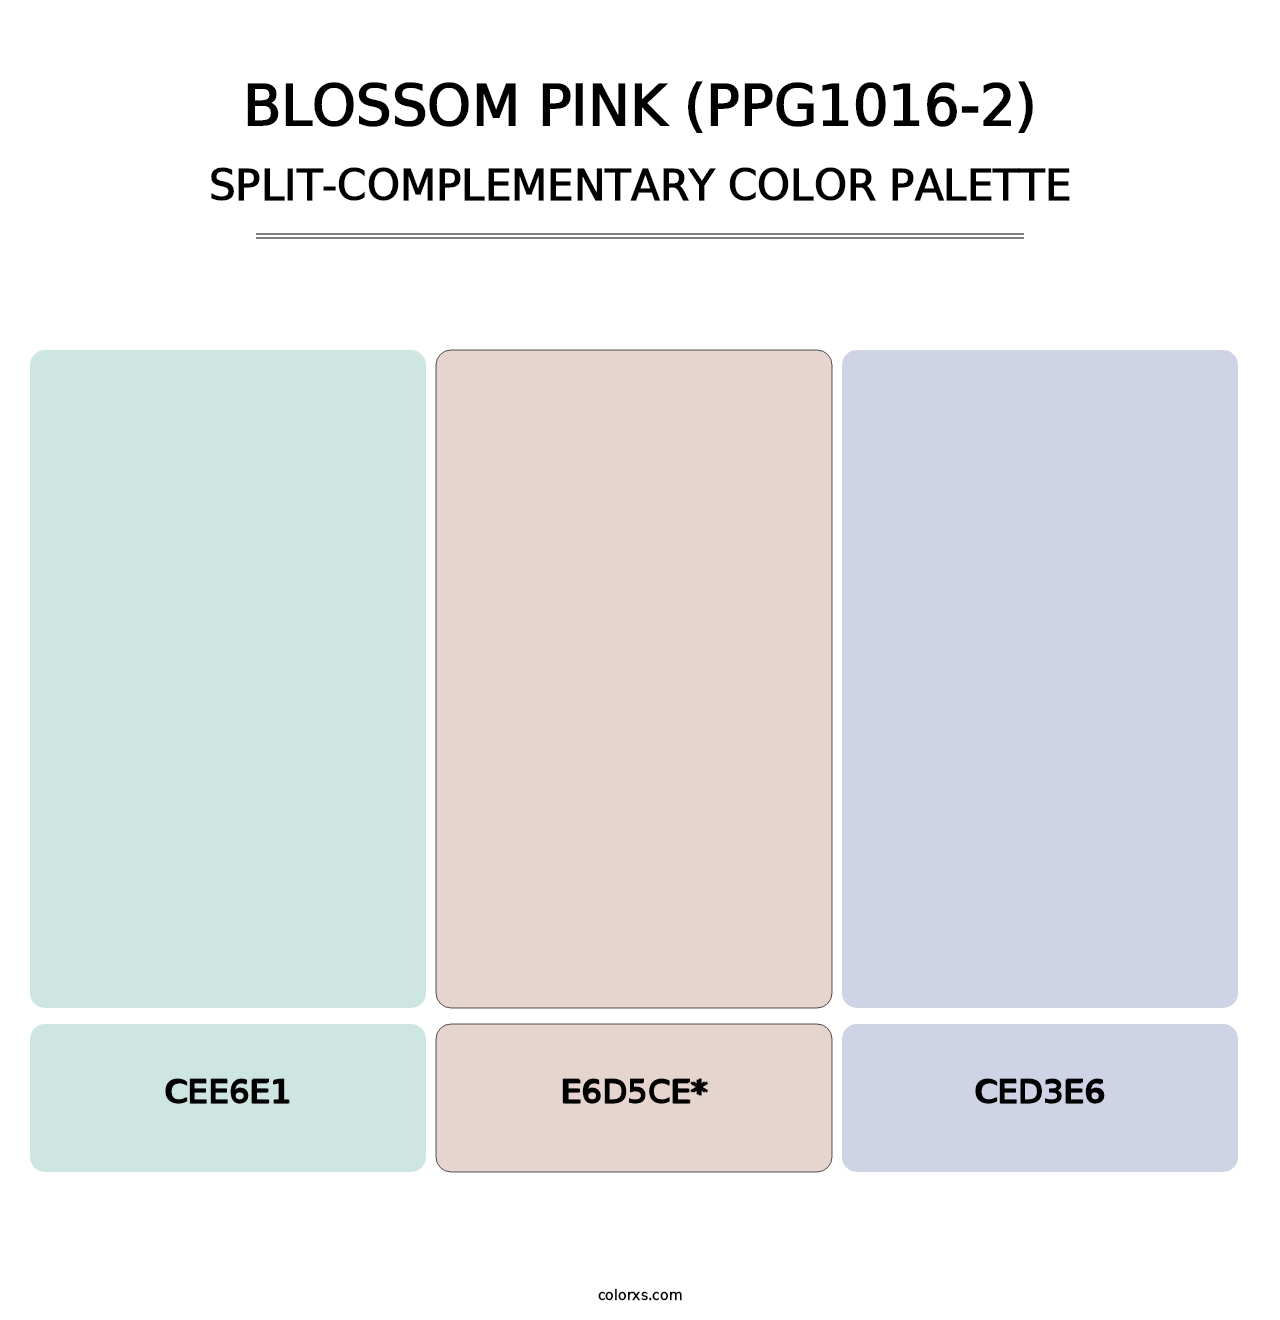 Blossom Pink (PPG1016-2) - Split-Complementary Color Palette